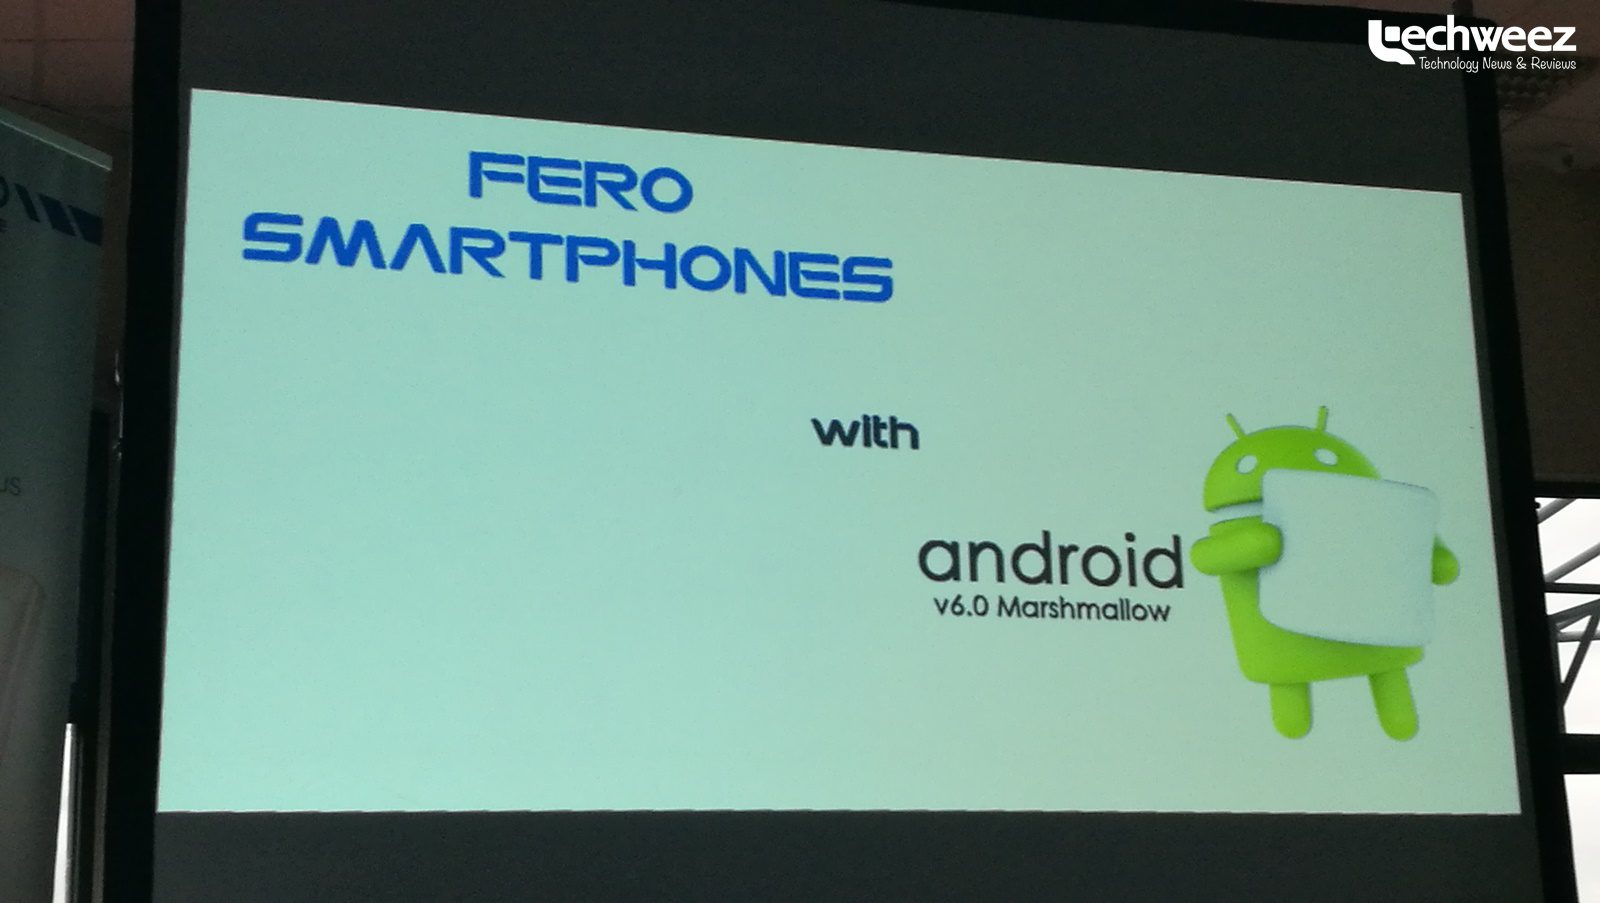 fero_mobile_smartphones